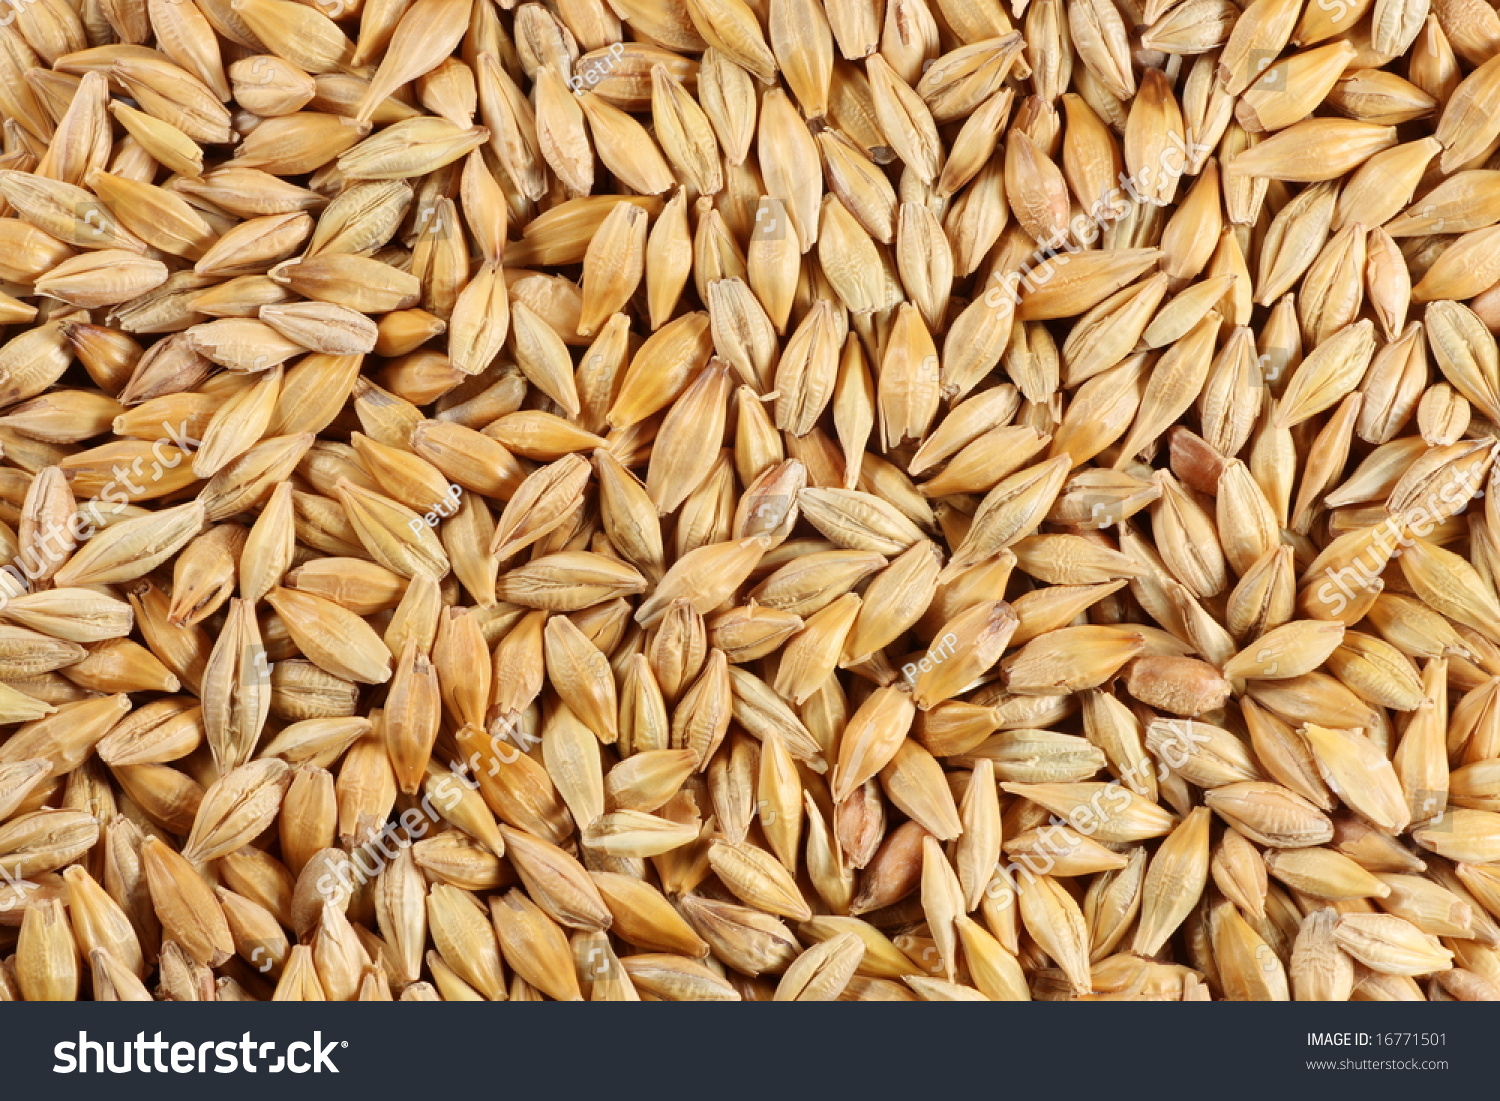 stock-photo-barleycorn-seeds-close-up-background-texture-16771501.jpg